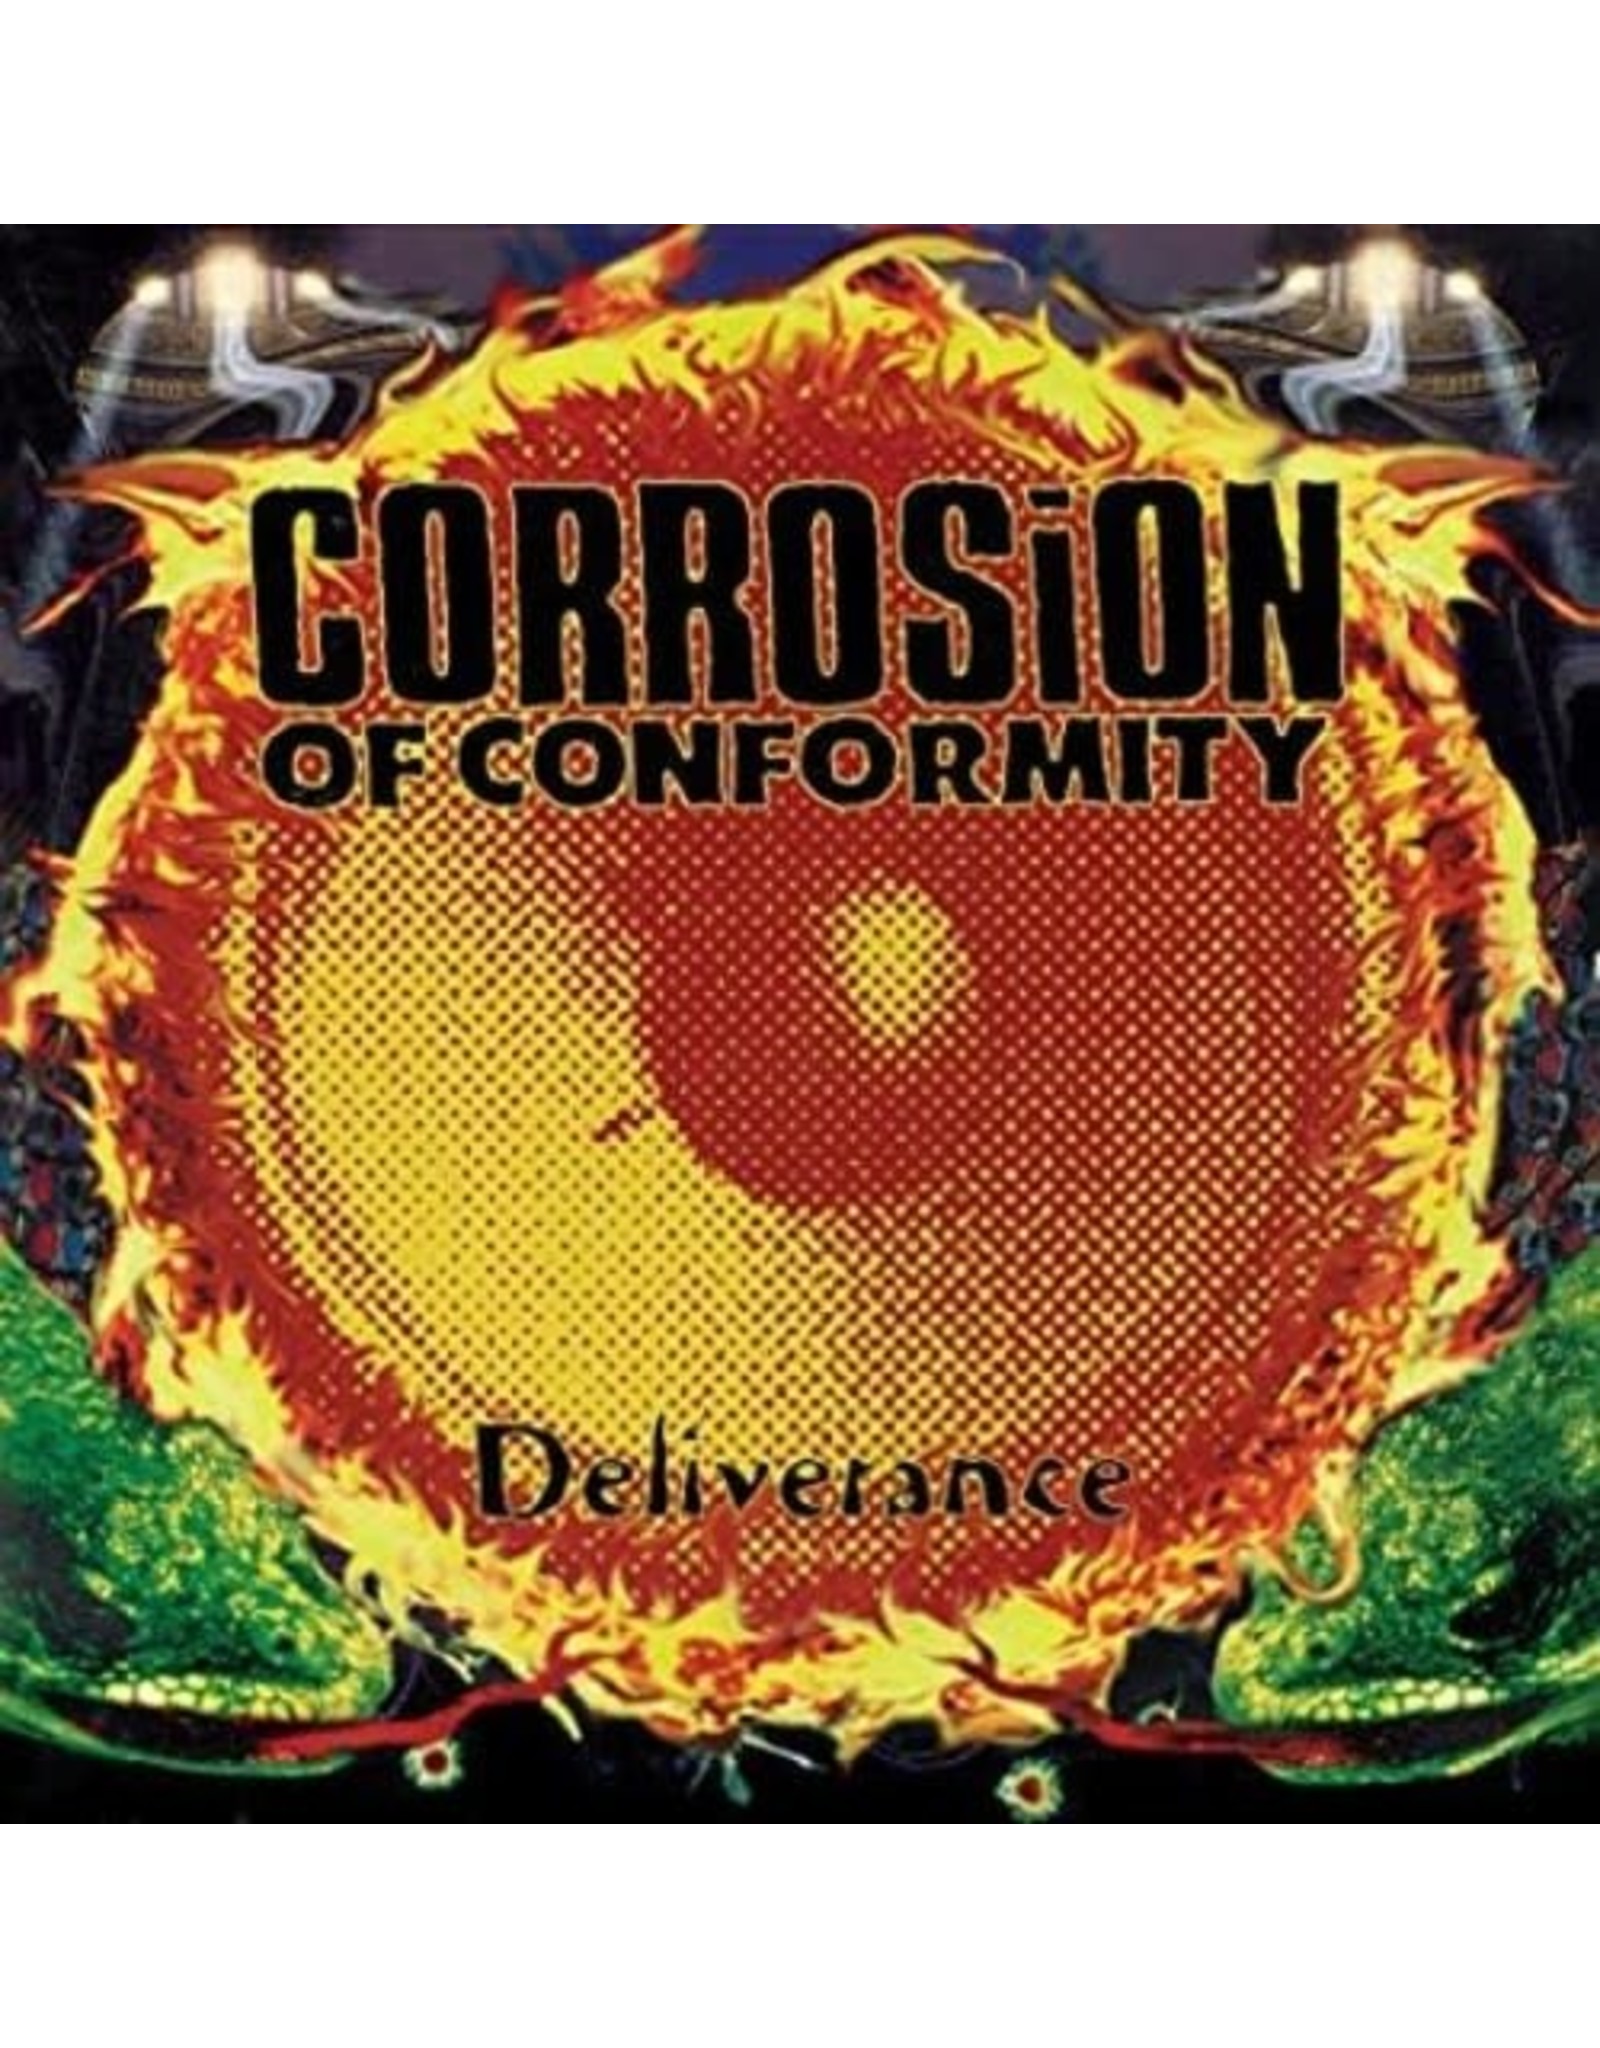 New Vinyl Corrosion of Conformity - Deliverance 2LP